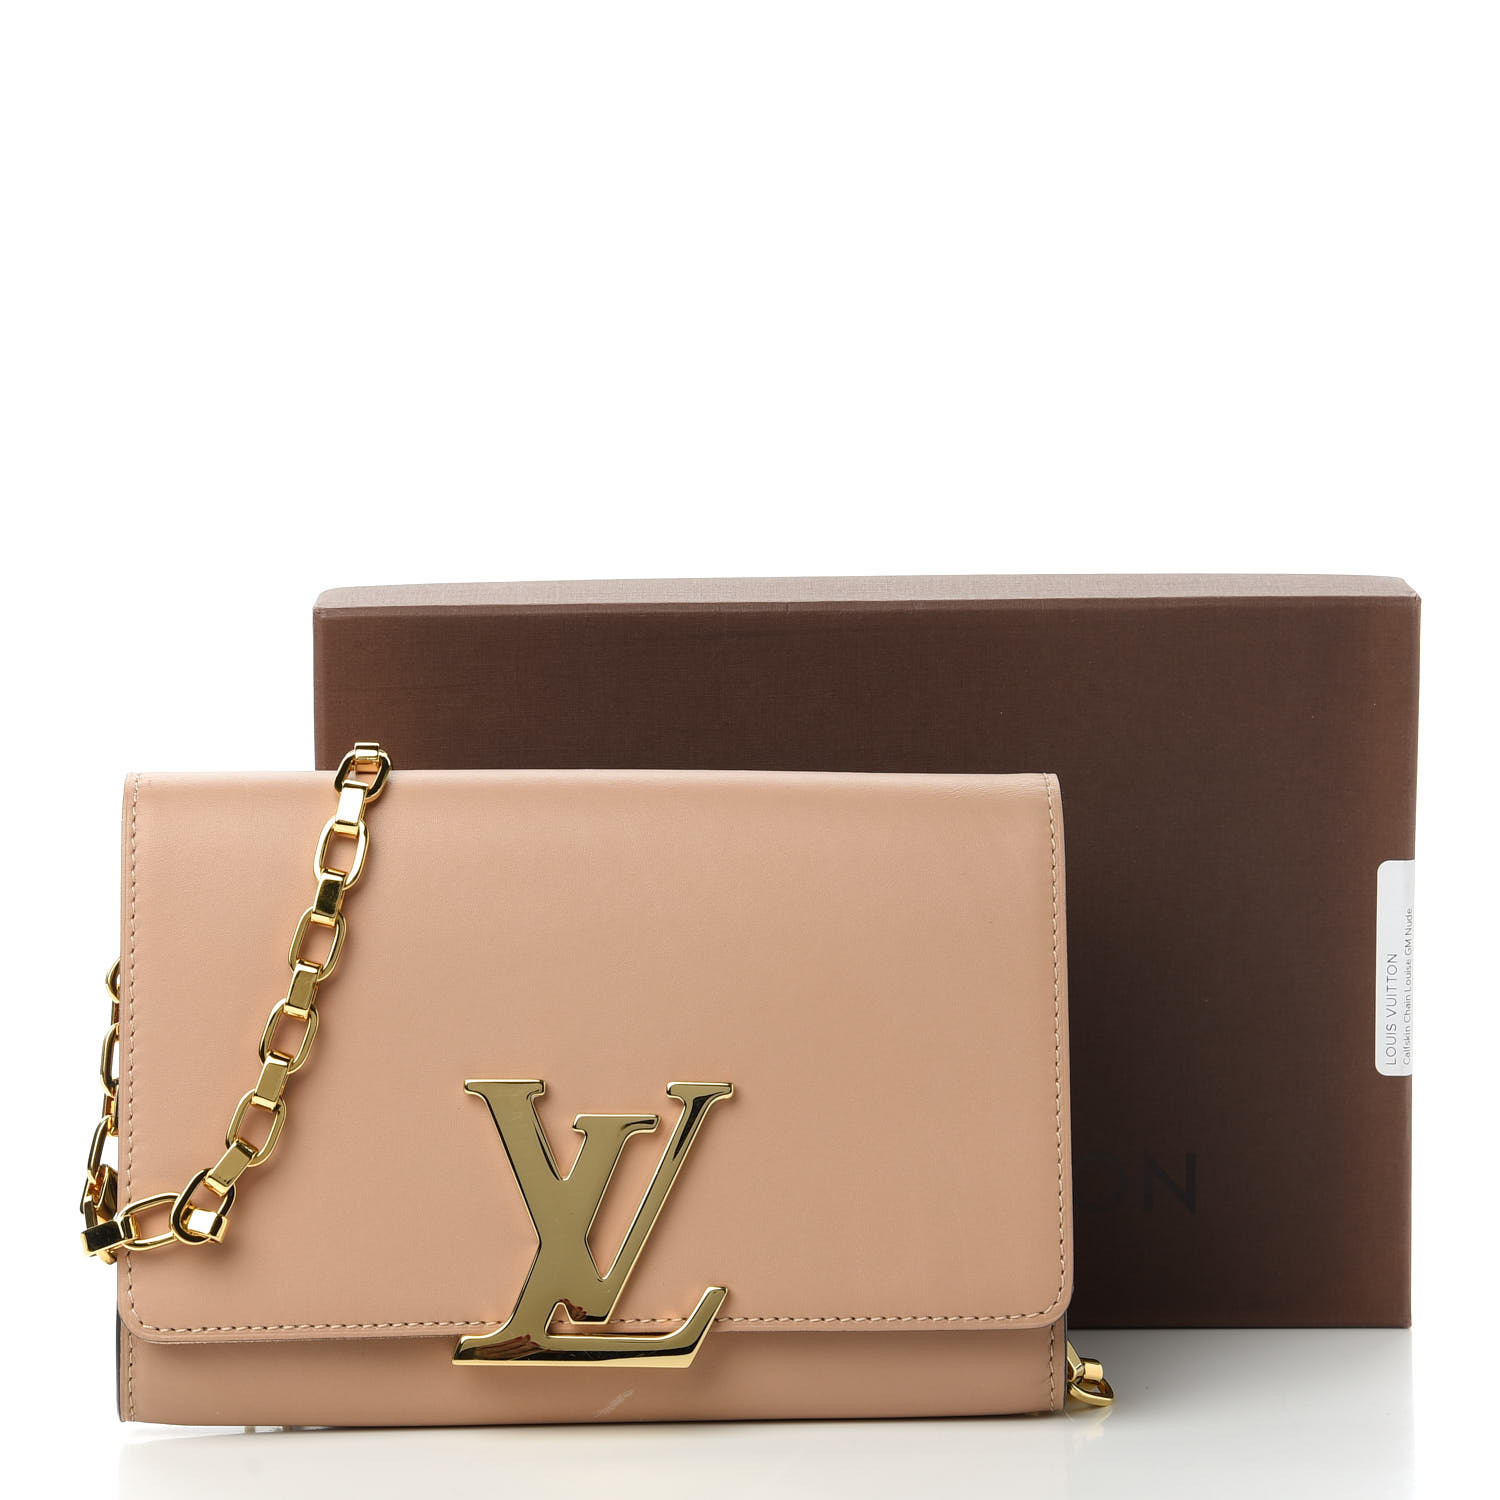 3a lv Bag Handbag Louis Vuitton Shoulder Nude Chain Louise 